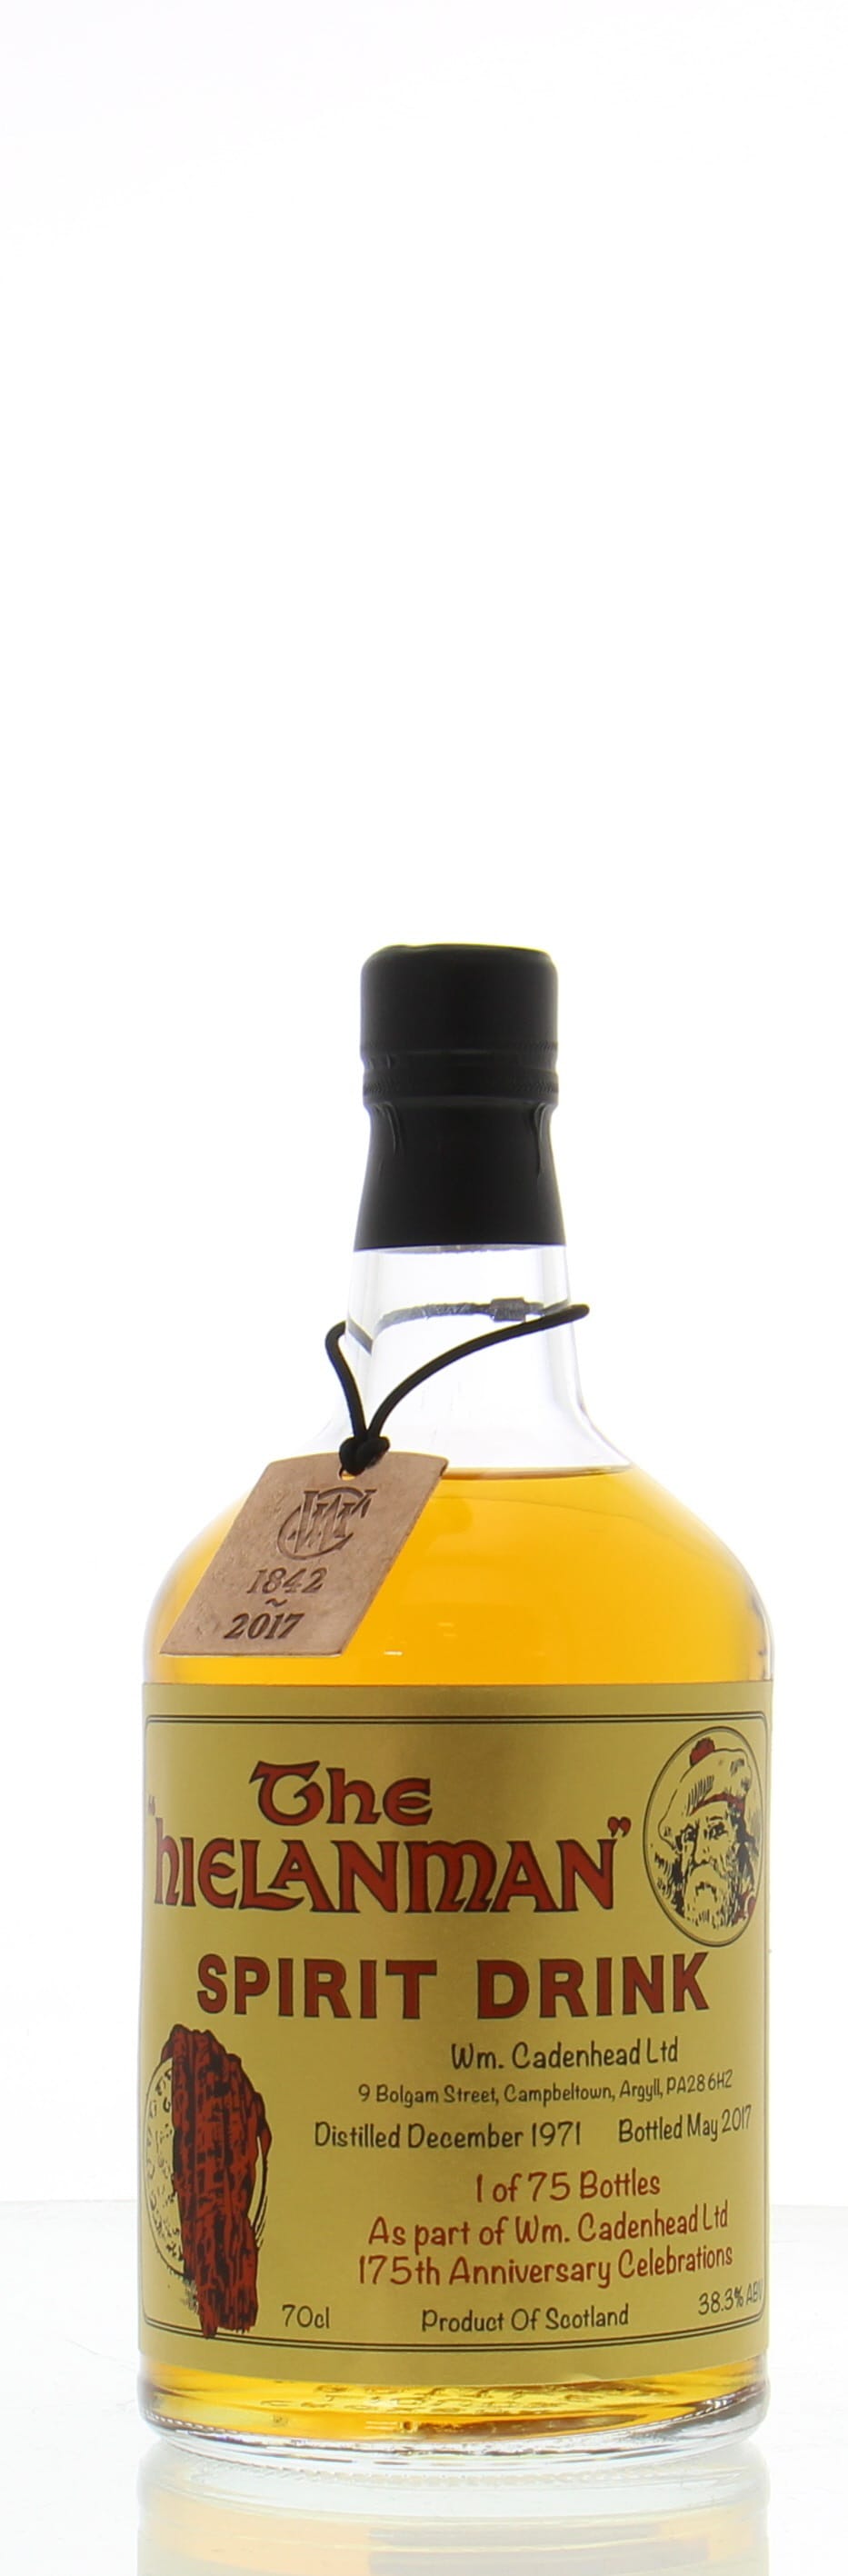 Glenfarclas - The Hielanman Spirit Drink 45 Years Old 38.3% 1971